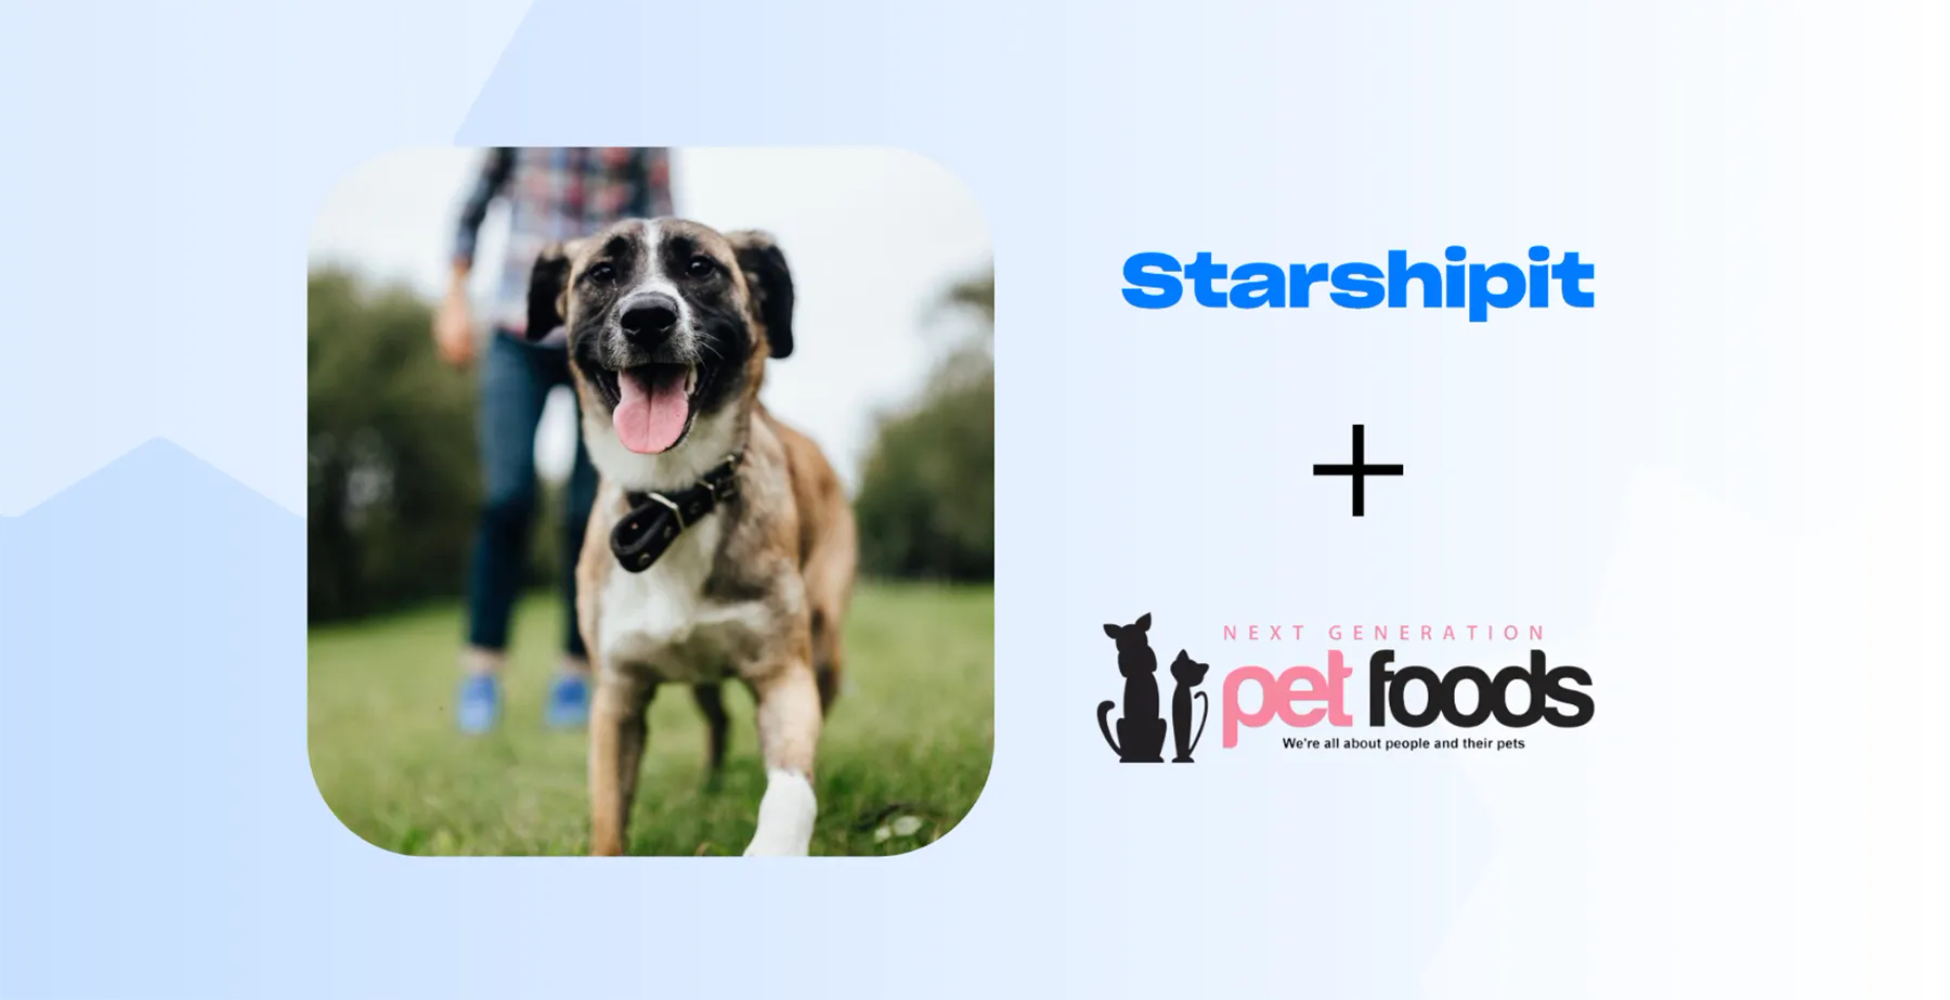 Starshipit and Next Generation Pet Foods case study